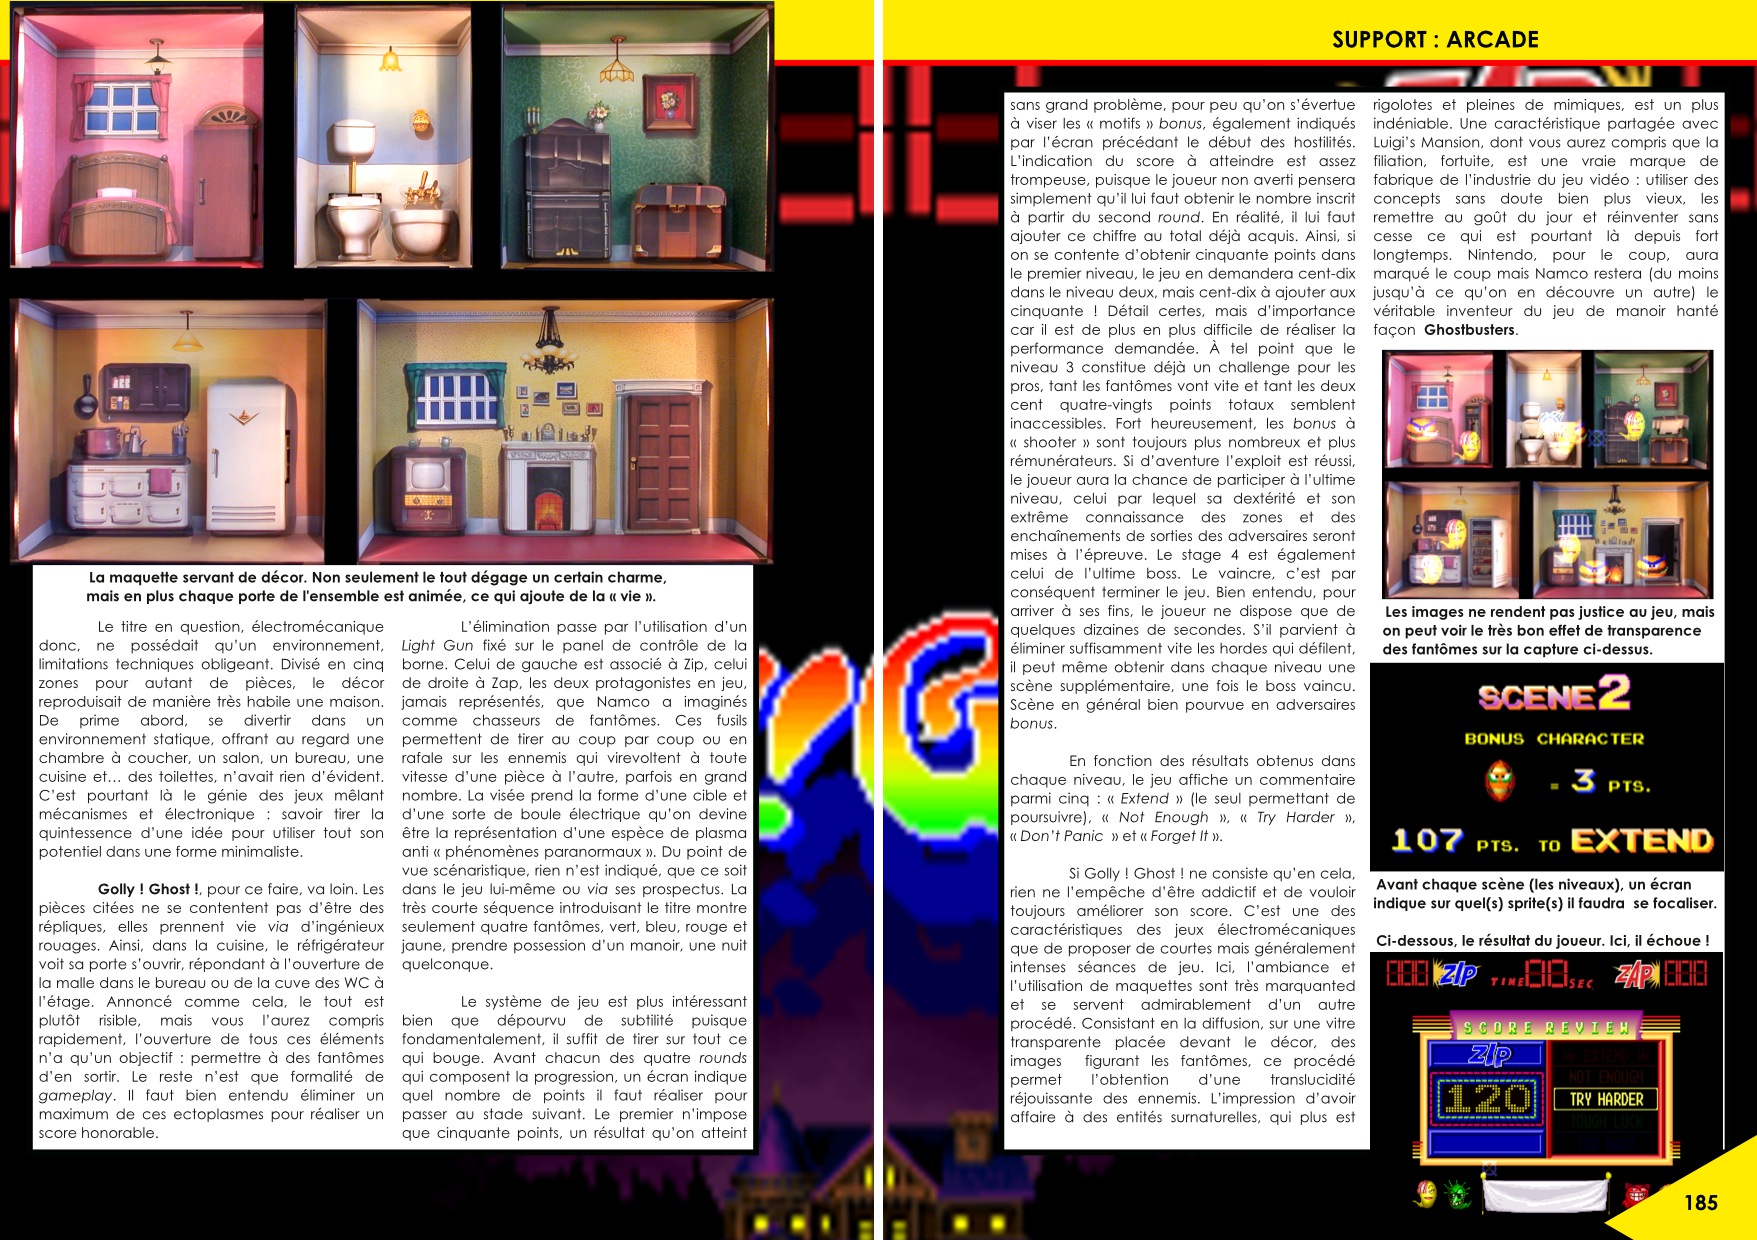 Golly Ghosts de Namco en arcade, précurseur de Luigi's Mansion article de Côté Gamers